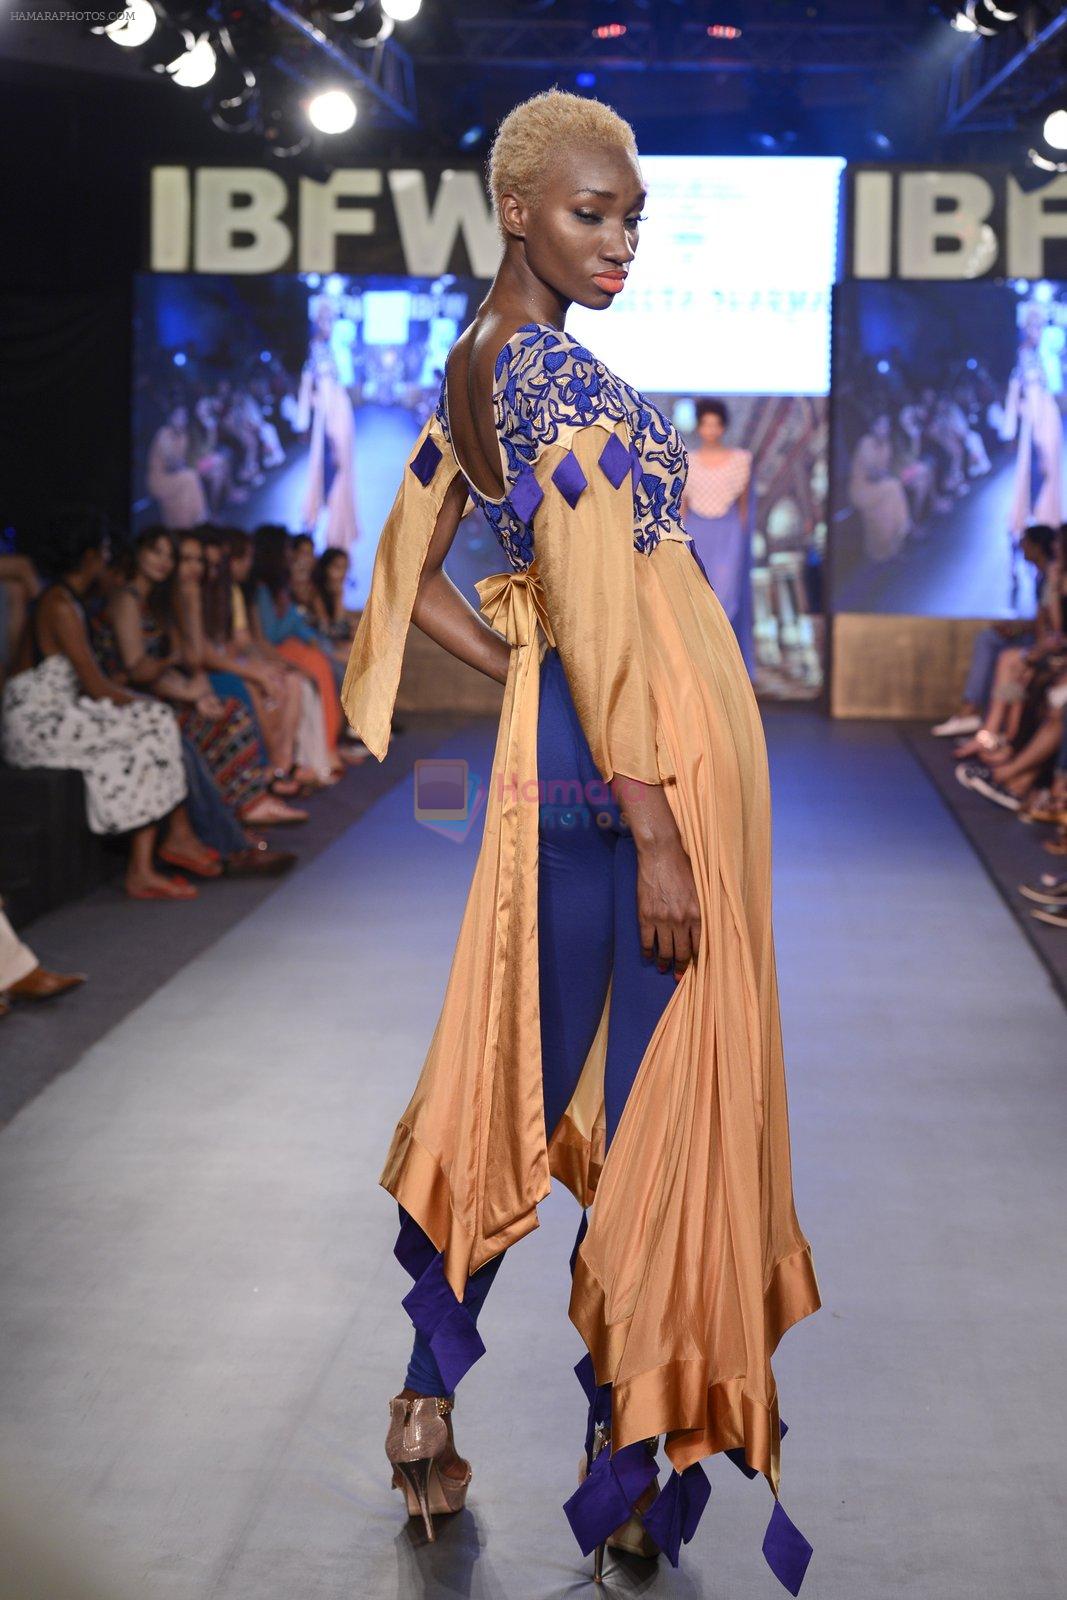 Model walk the ramp for Sangeeta Sharma Show on day 2 of Gionee India Beach Fashion Week on 30th Oct 2015